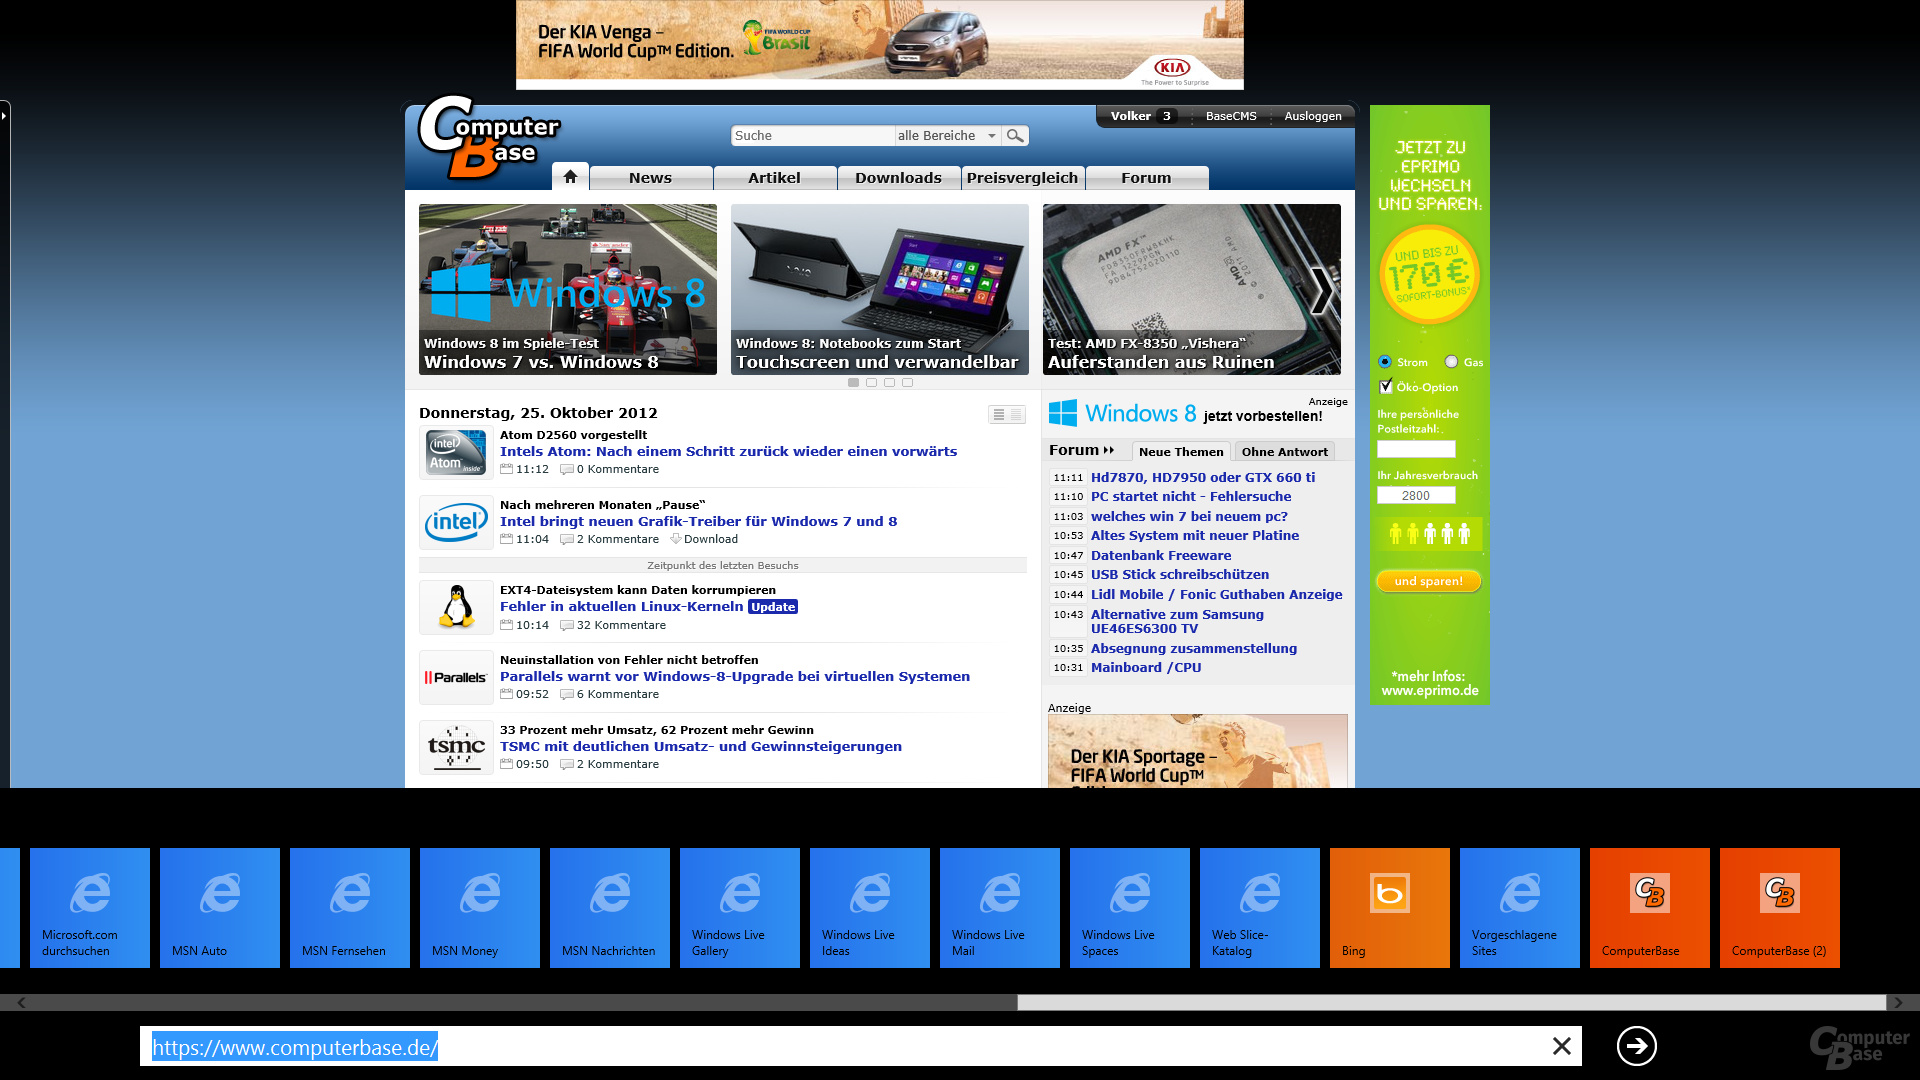 Internet Explorer 10 unter Modern UI